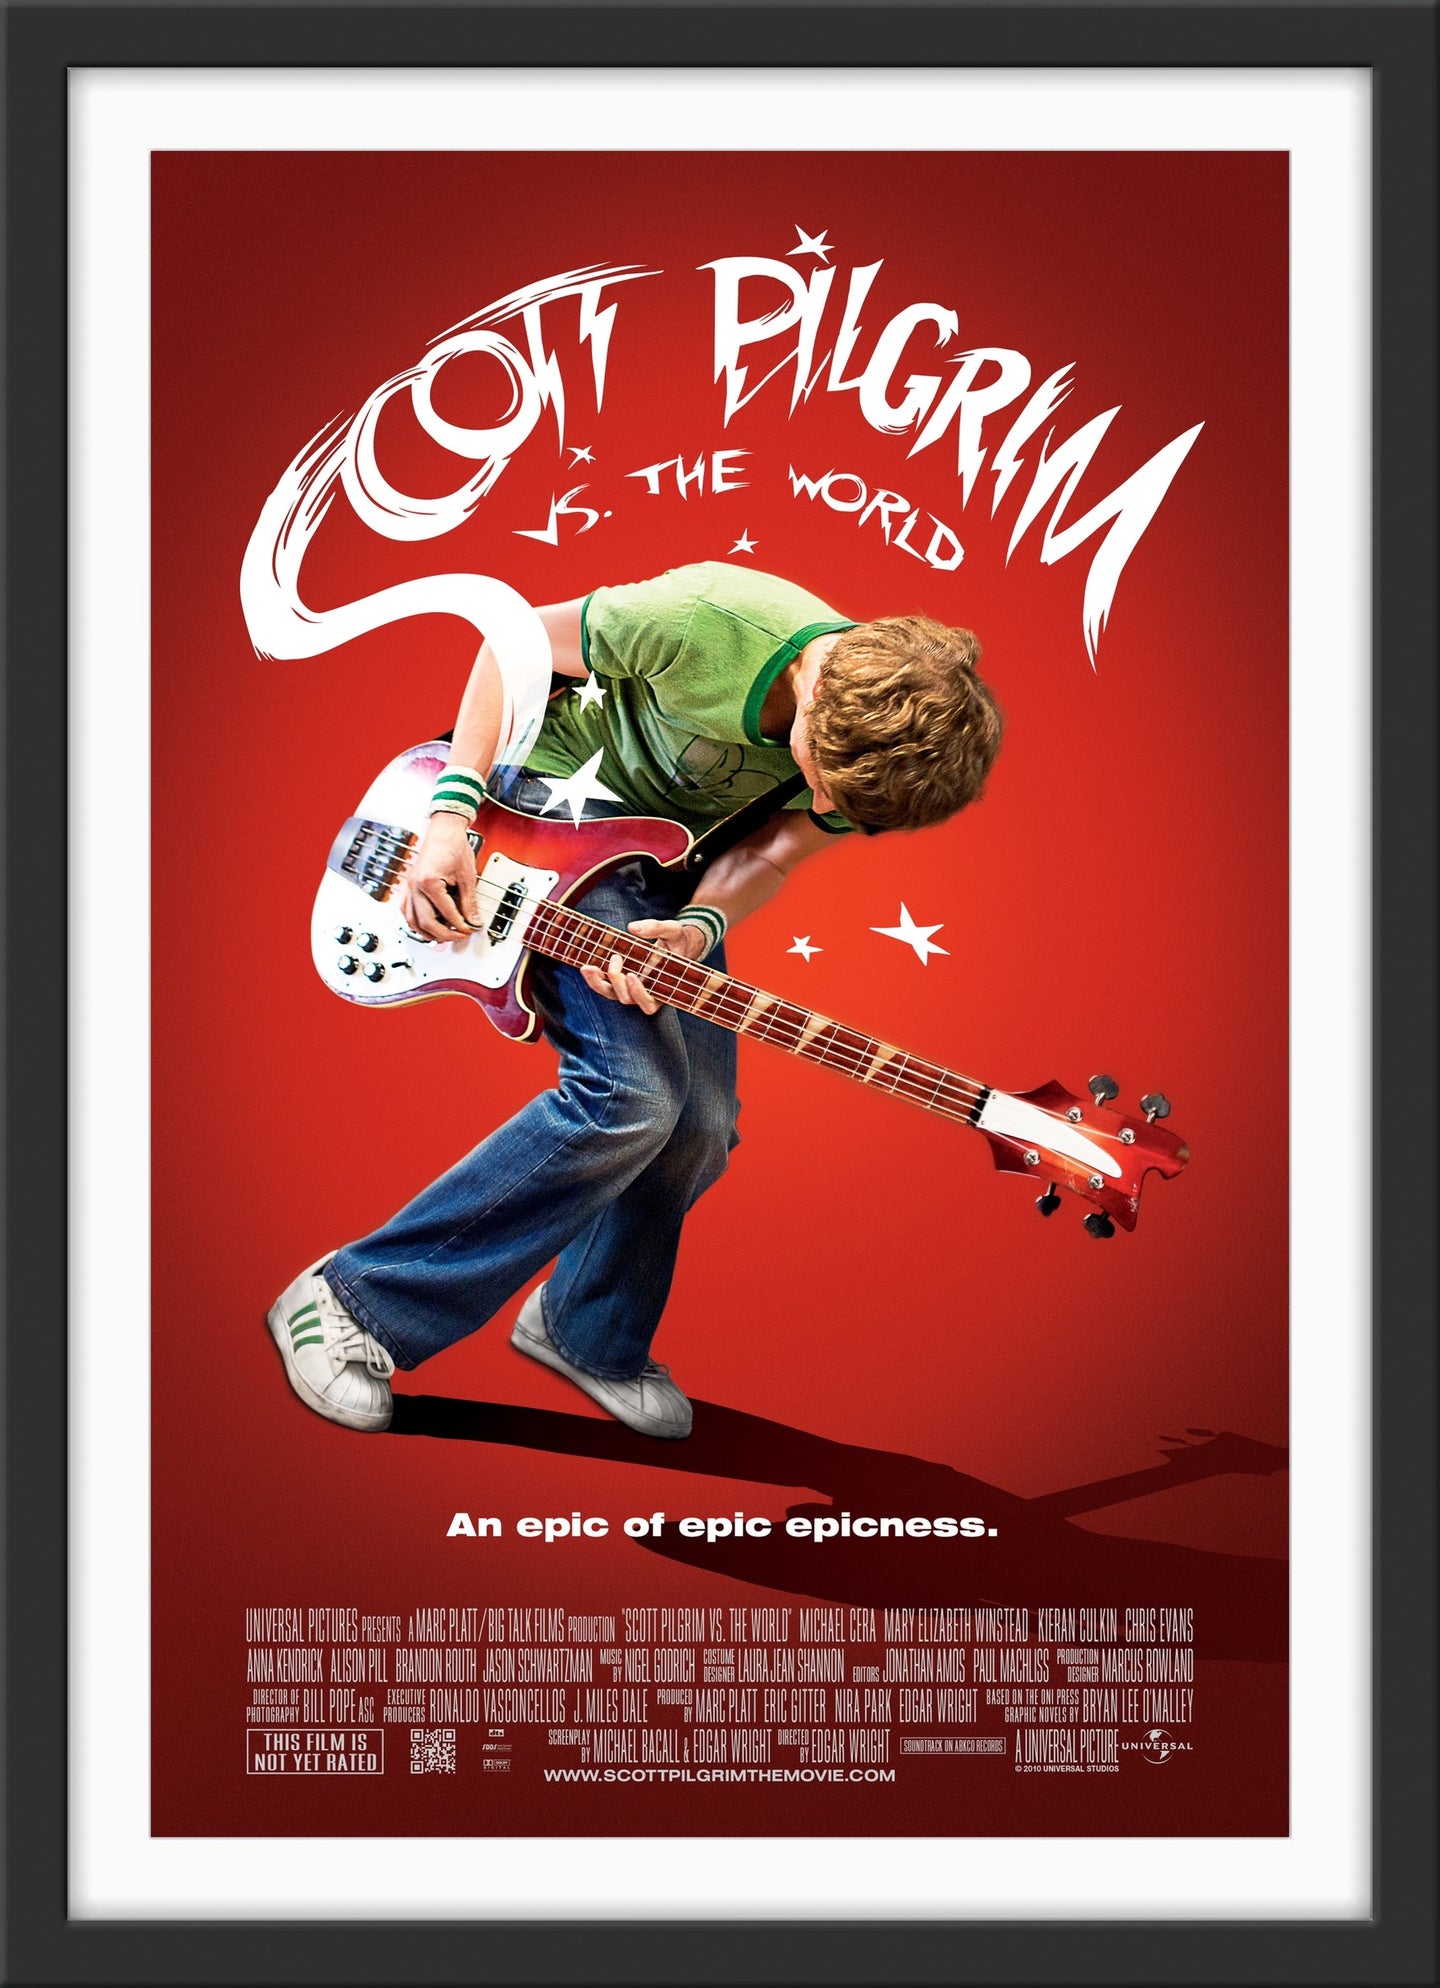 An original movie poster for the film Scott Pilgrim vs The World